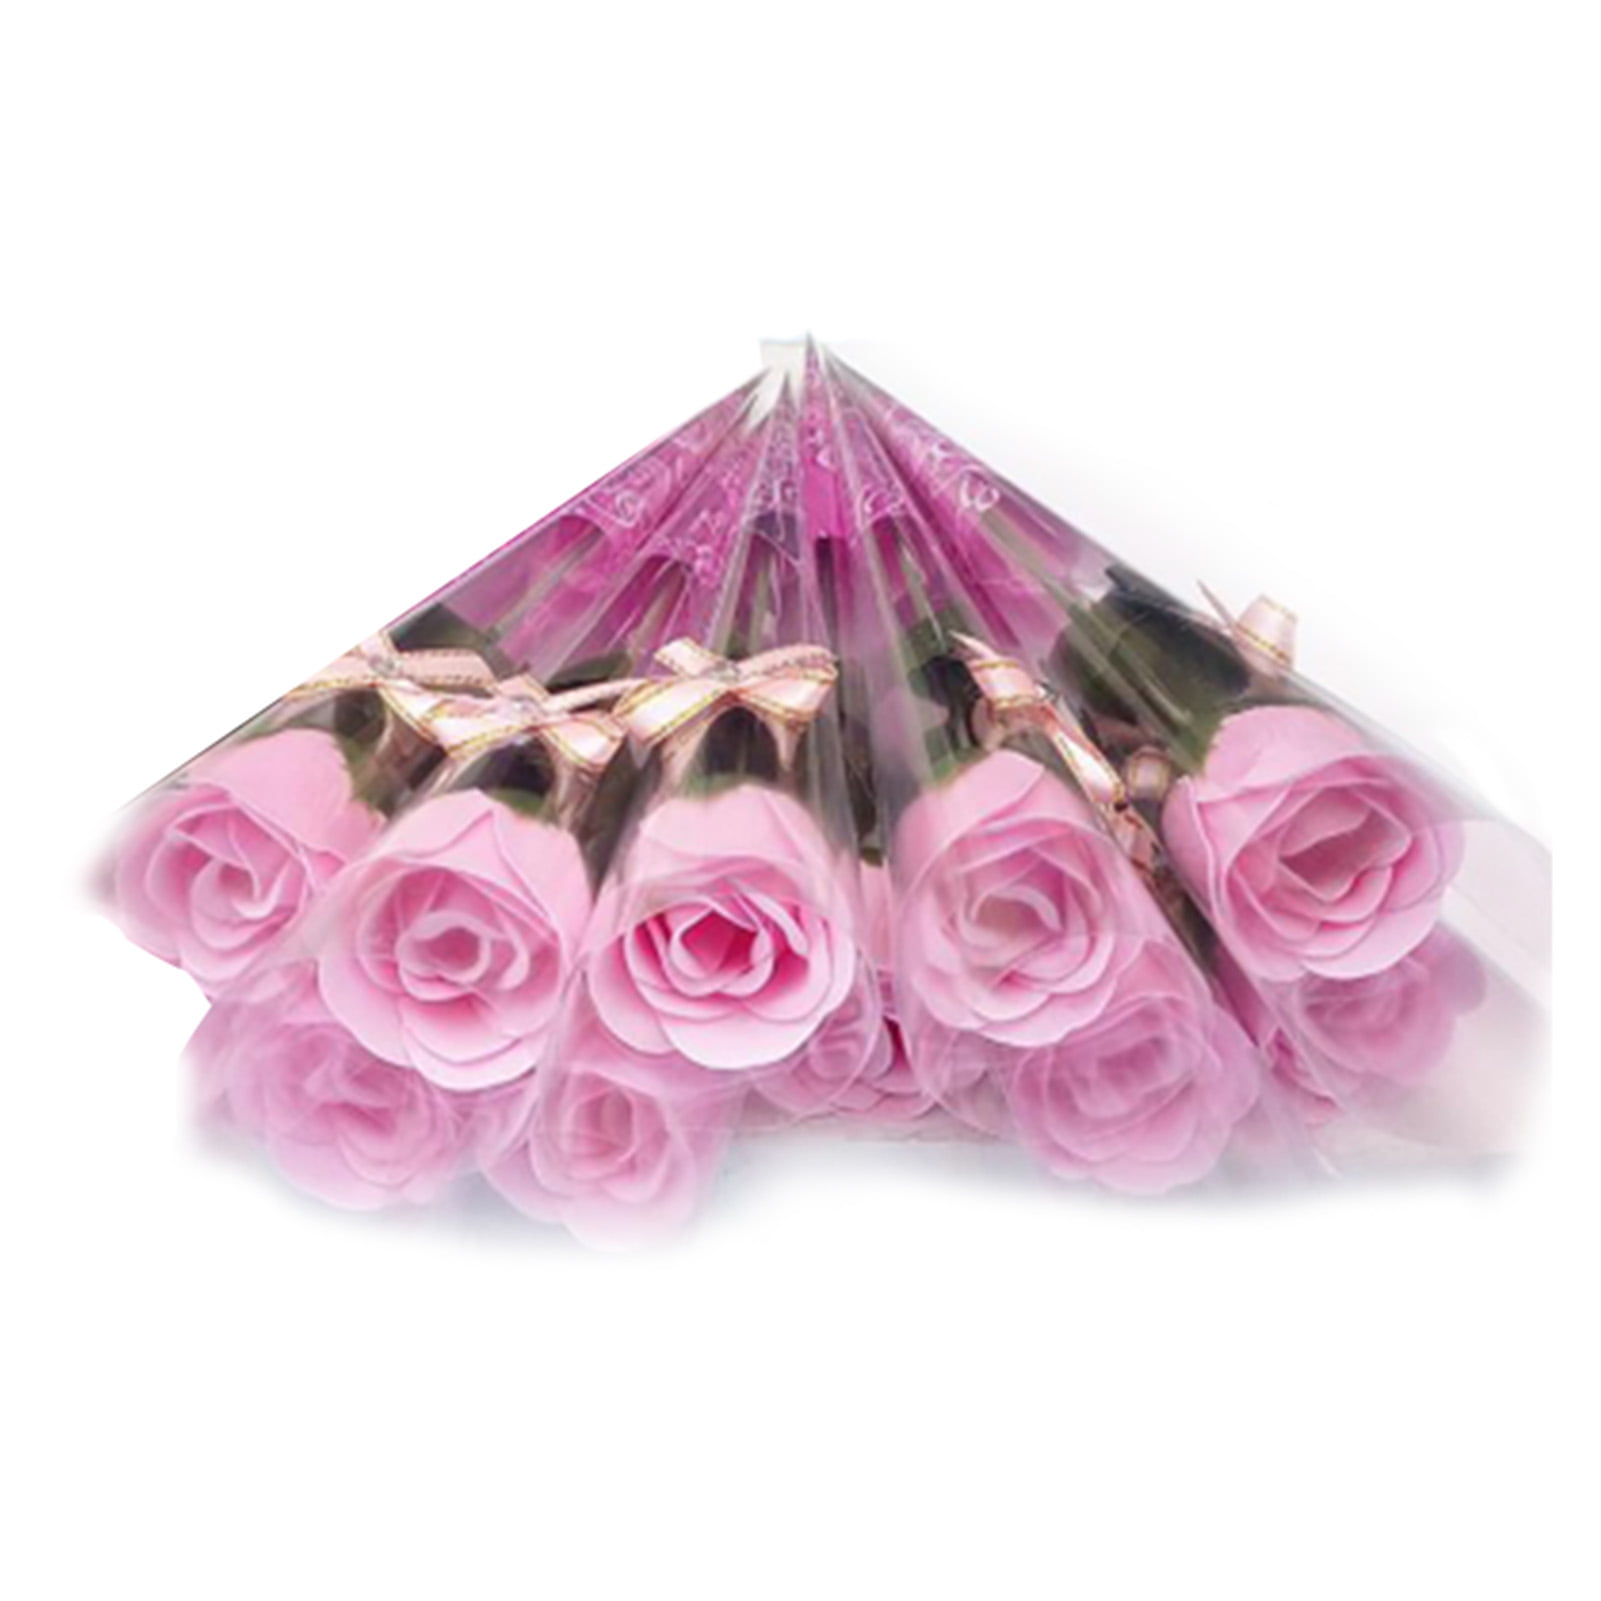 Details about   Rose Ornaments Pendant Creative Flower Single Ornament Valentine's gift 